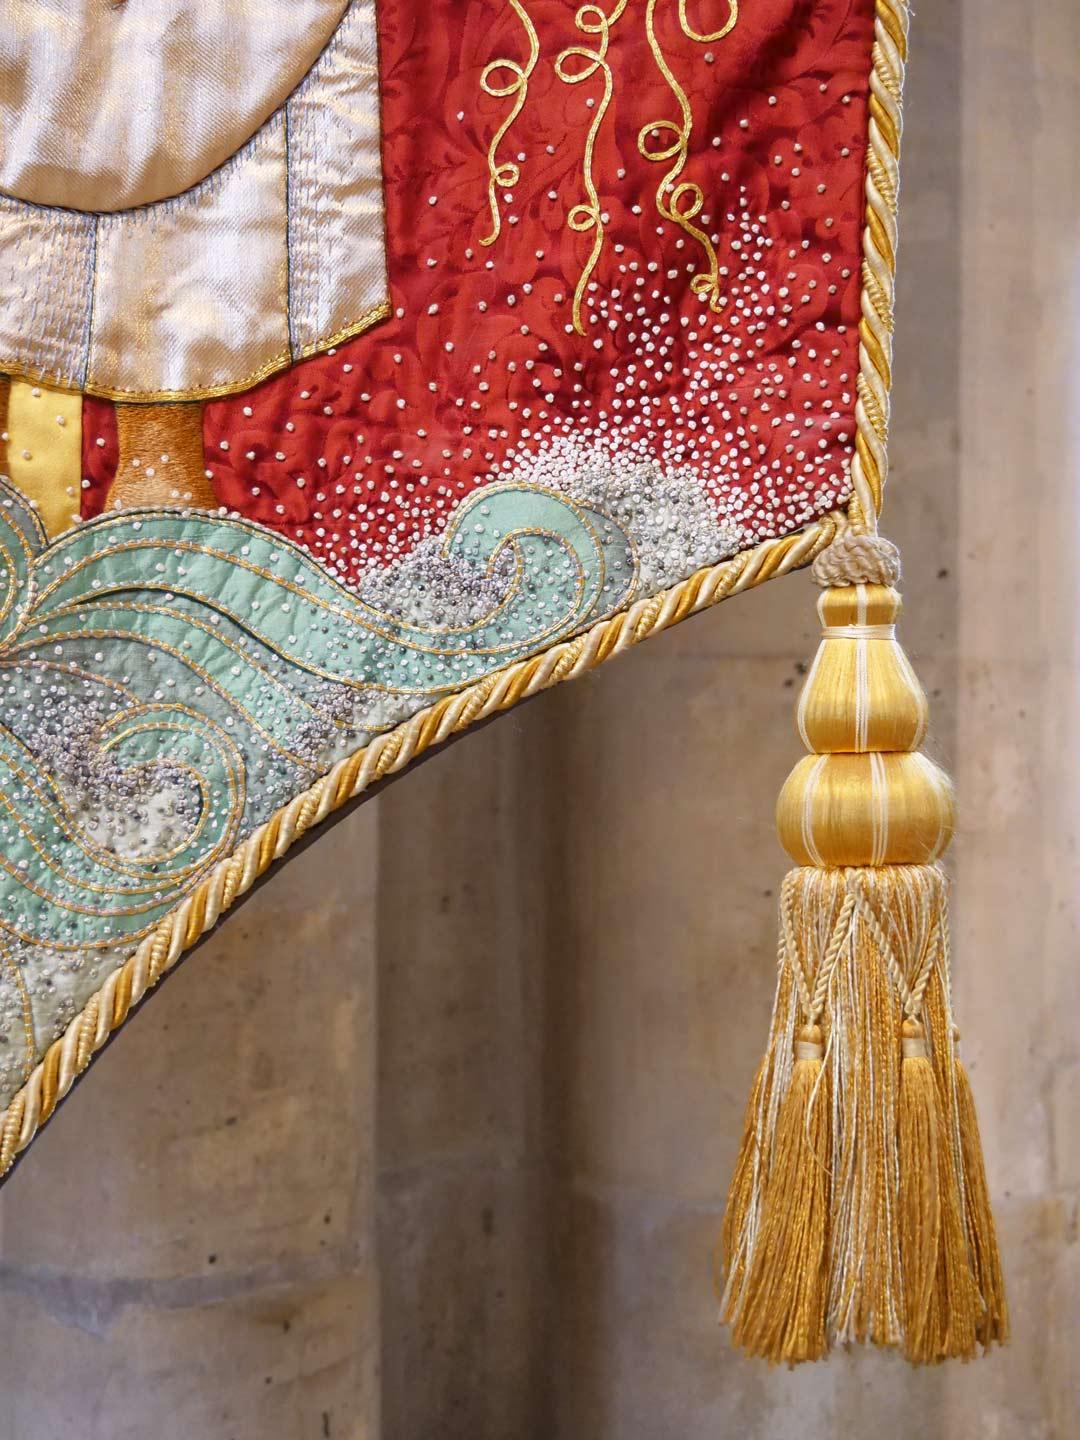 York banner - Sacramental life of the Church - Watts & Co.